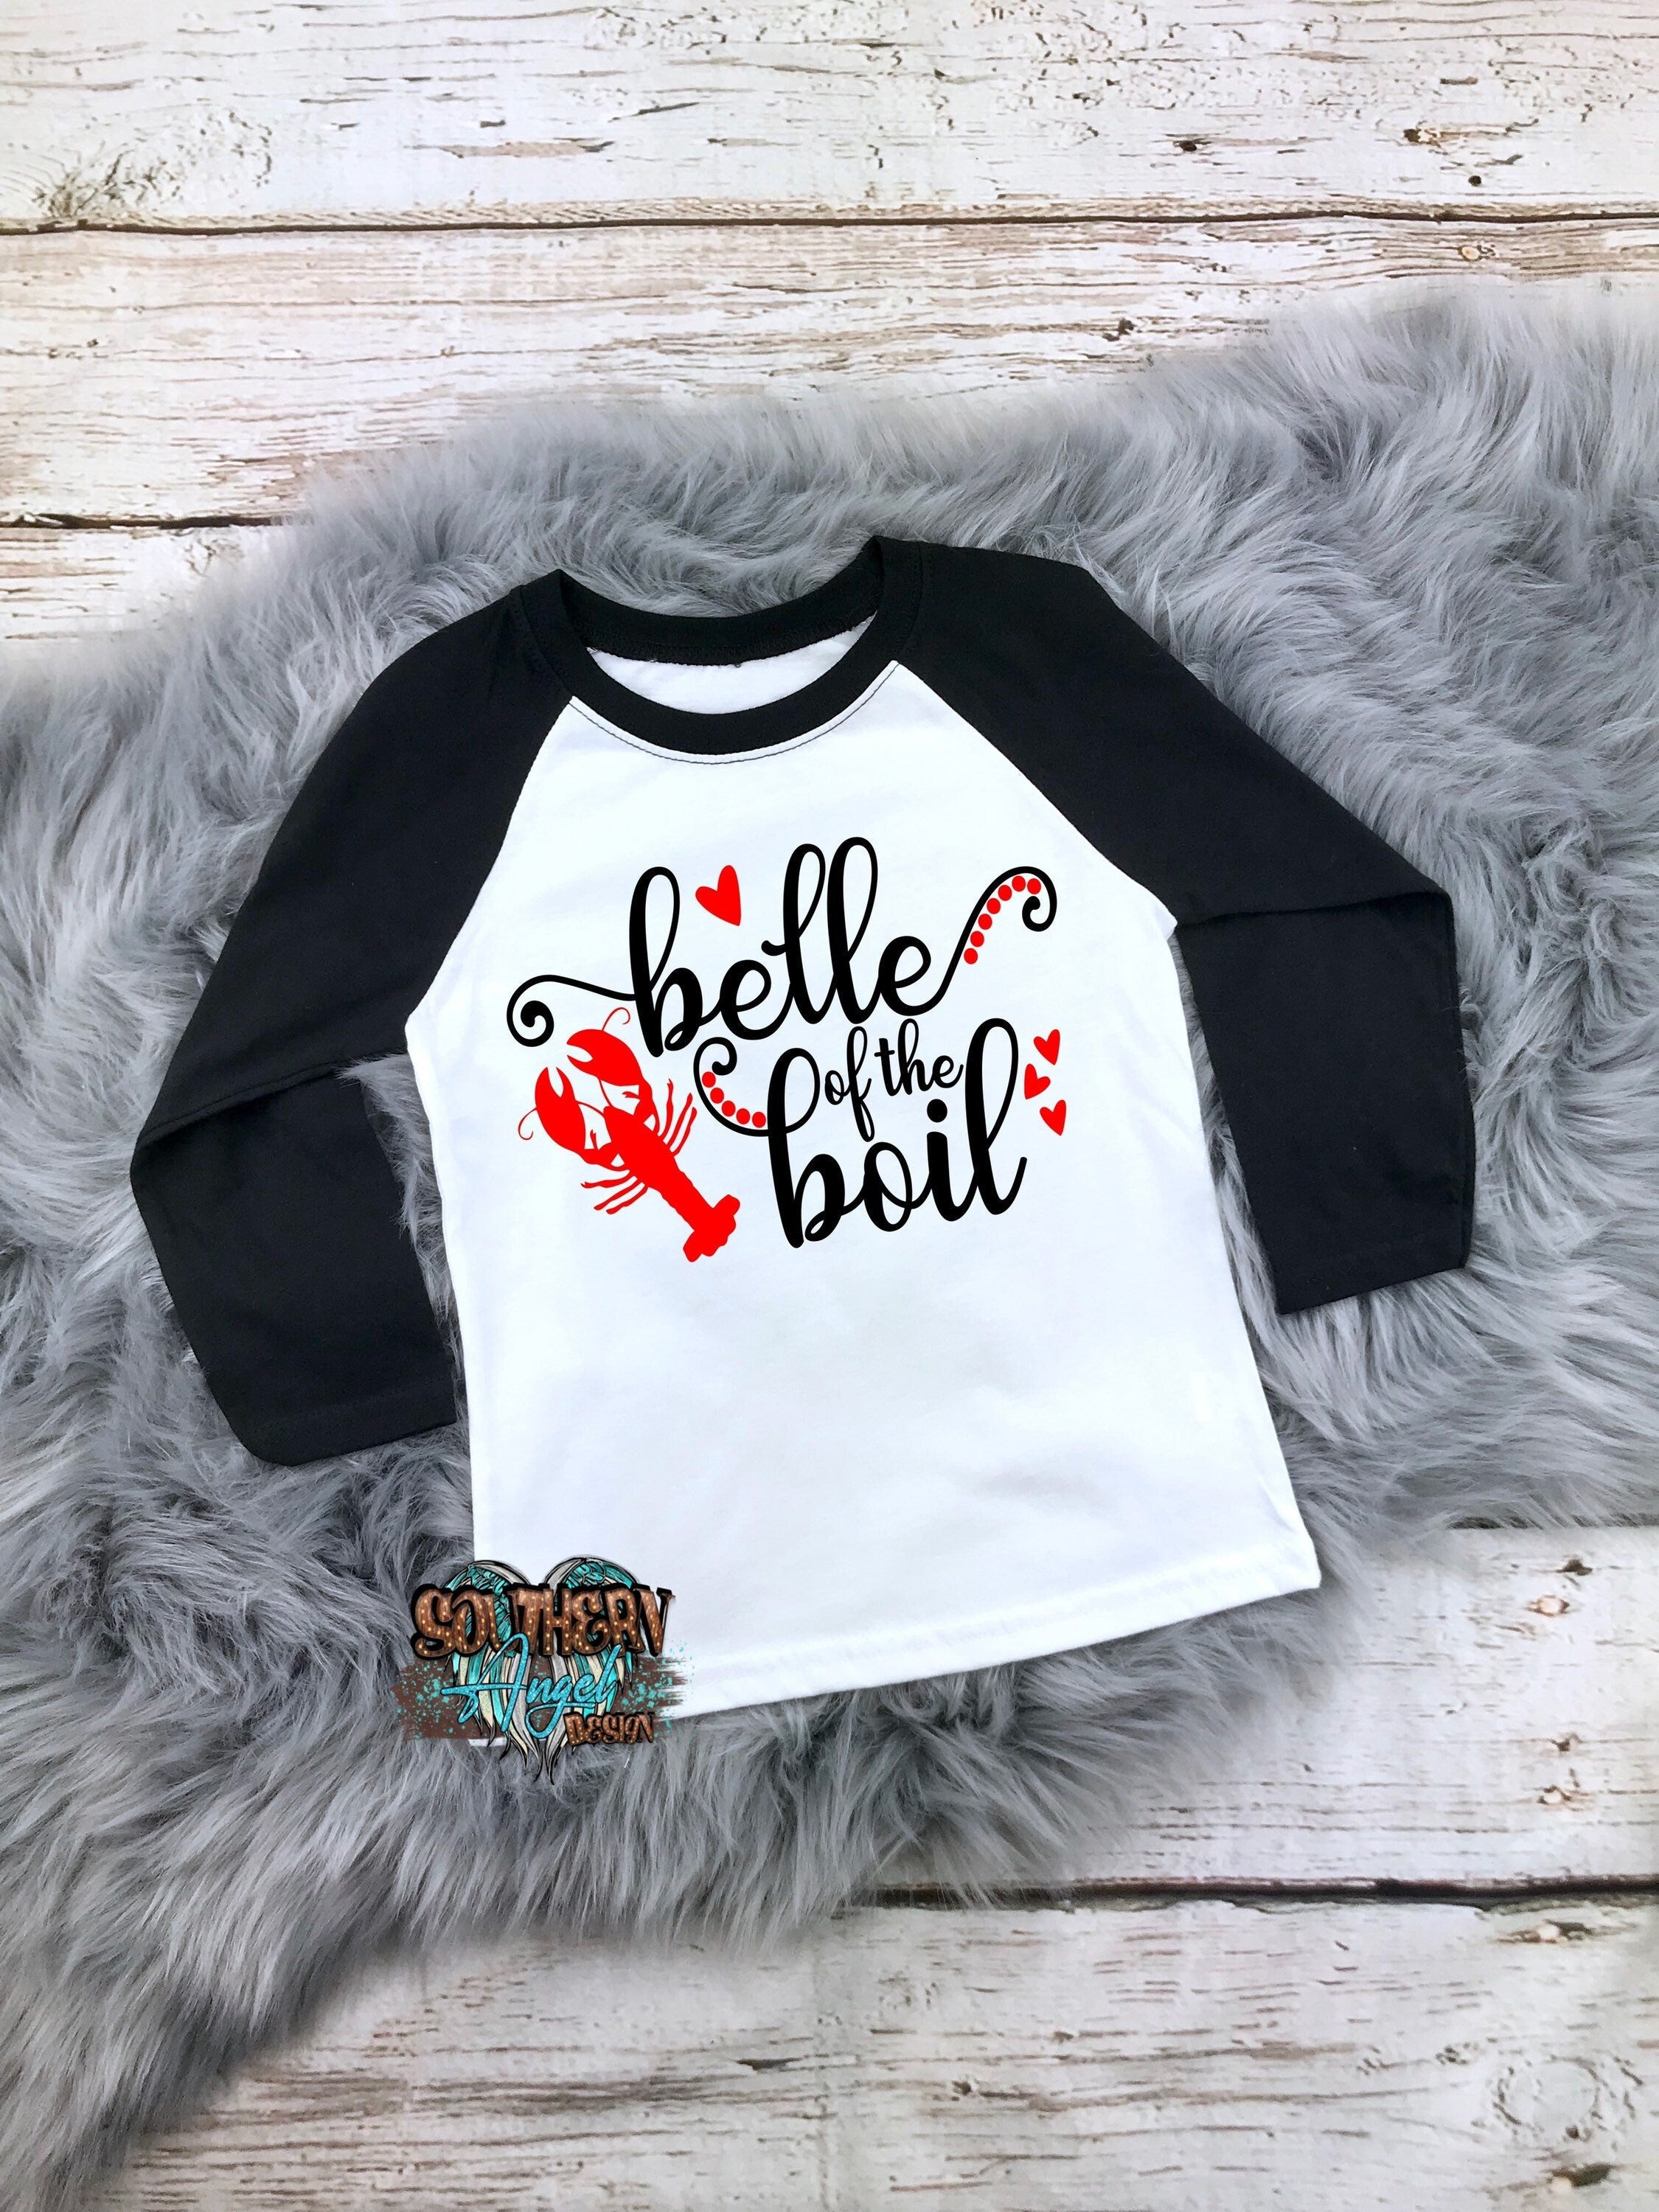 Kids Crawfish Boil shirt, Belle of the boil, Kids Crawdaddy shirt, Toddler crawfish shirt, Kids mudbug shirt, Personalized crawfish shirt